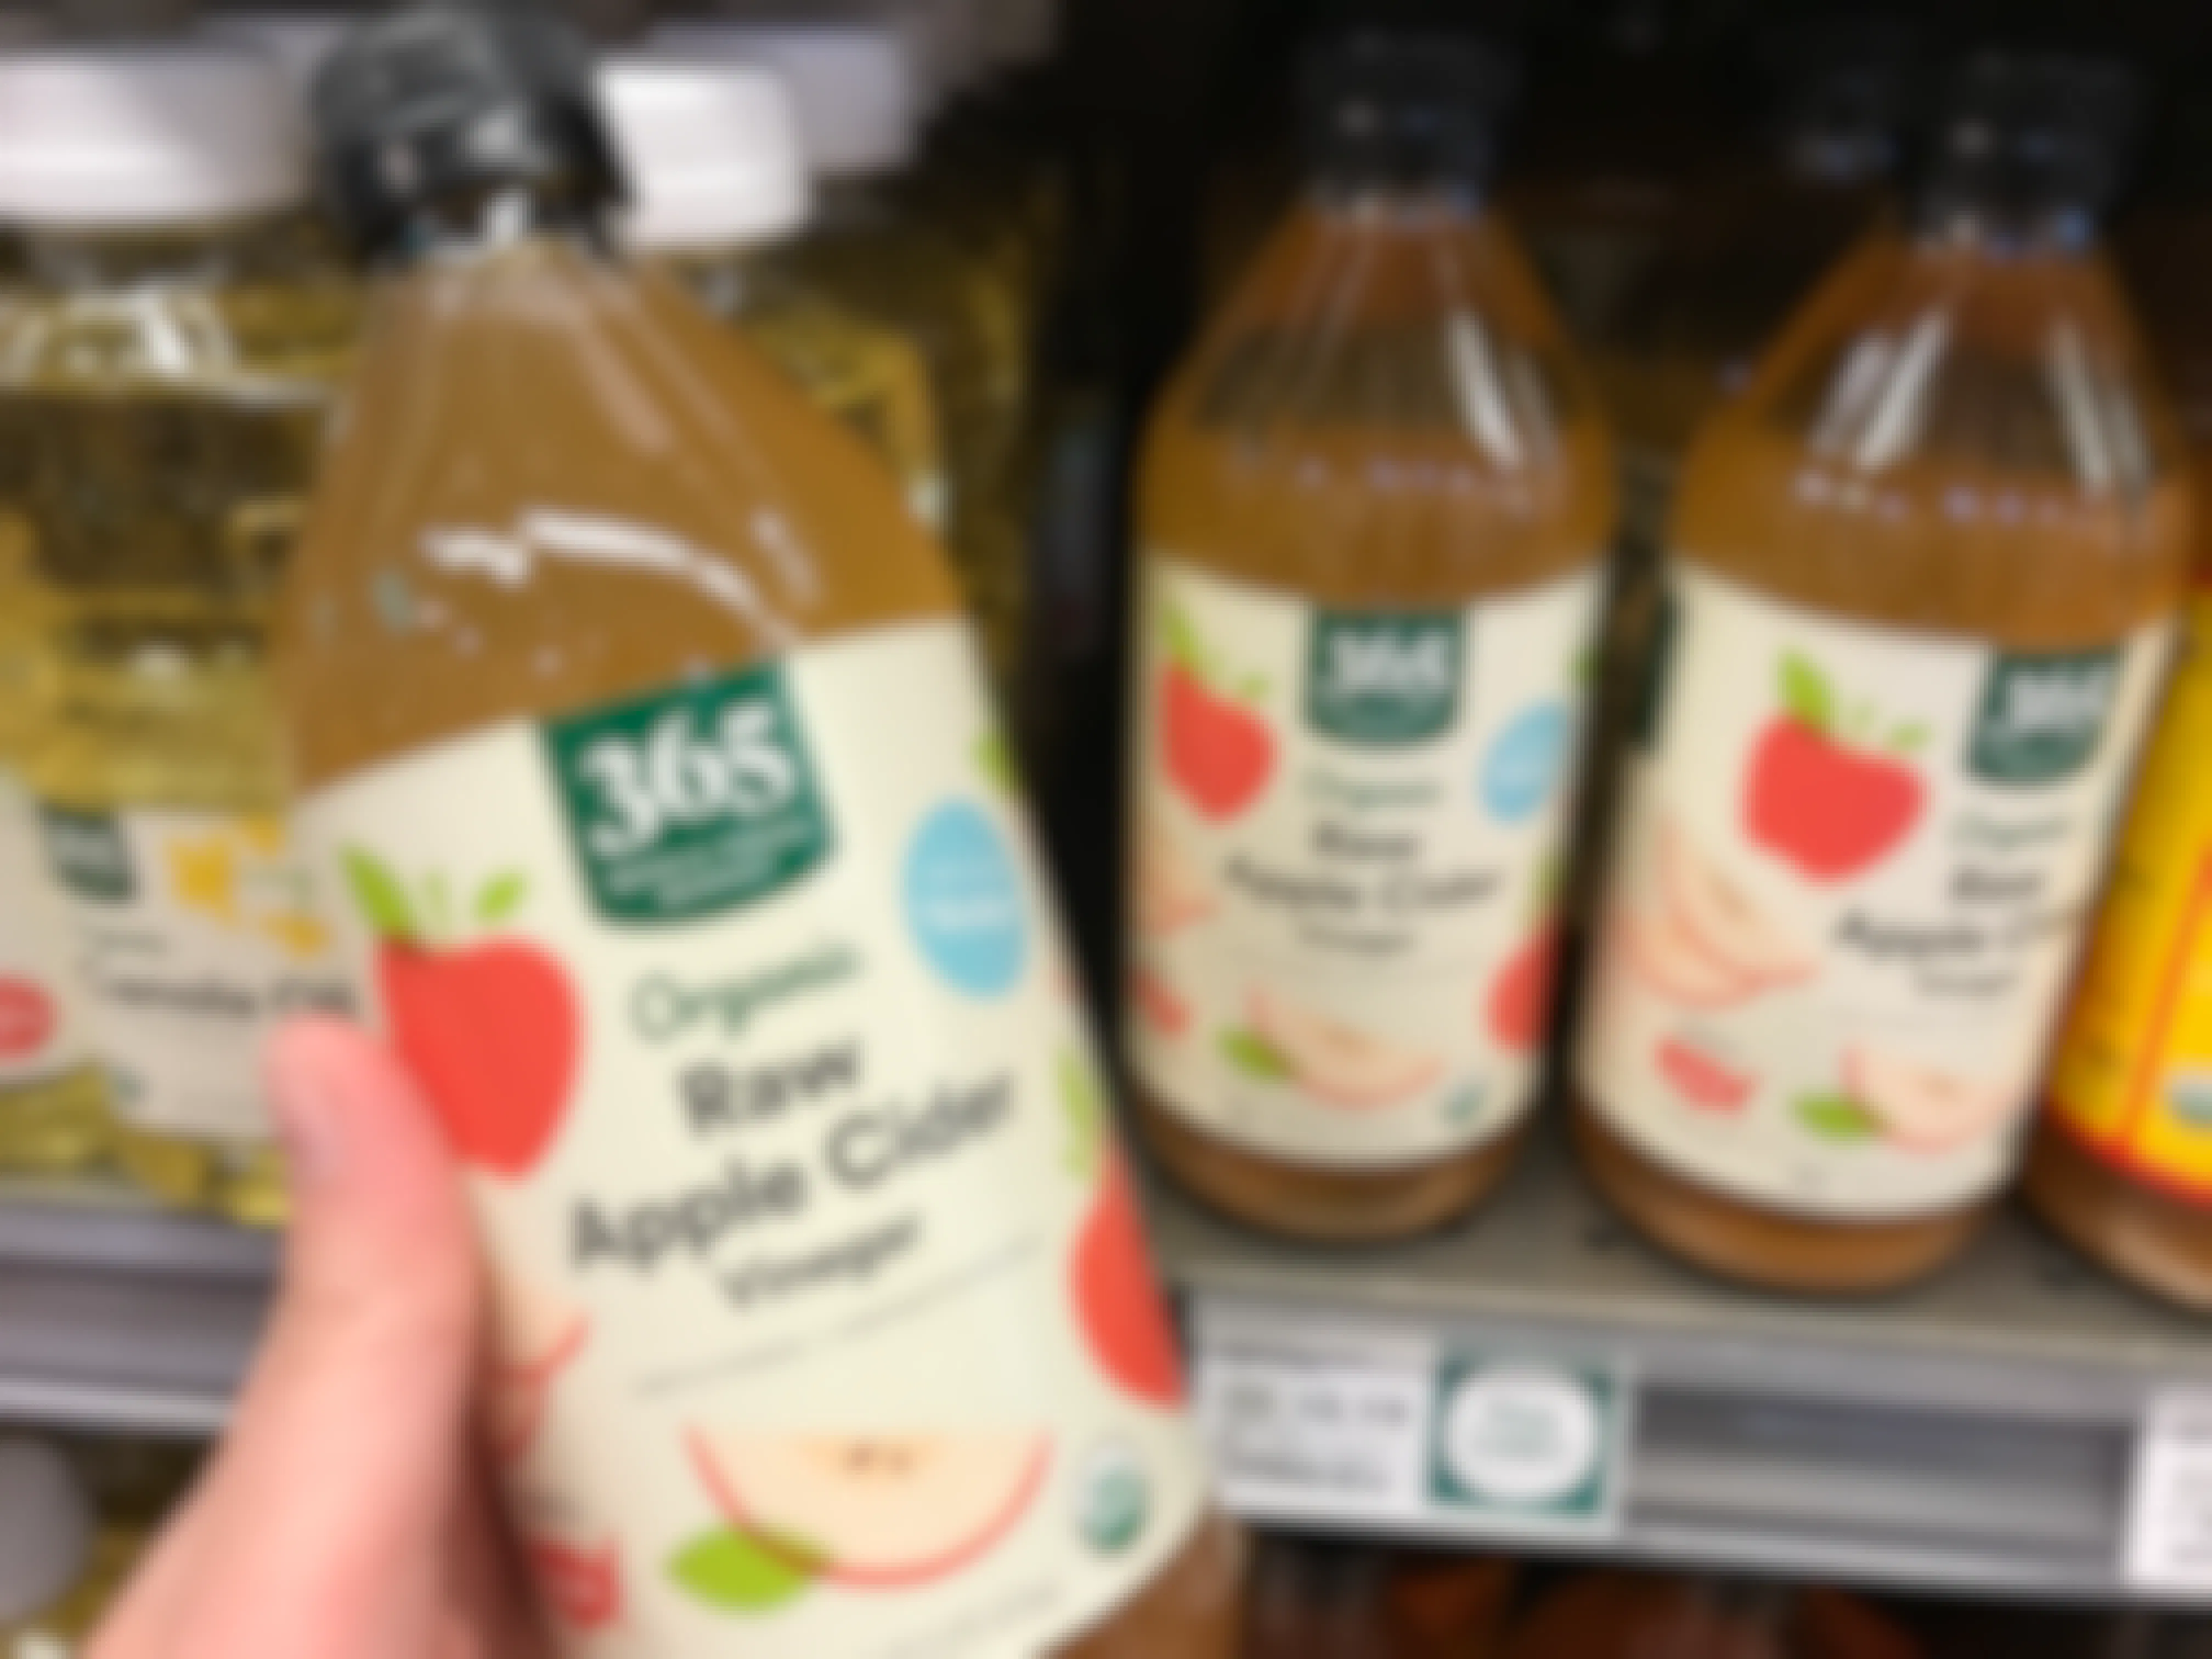 Whole Foods 365 brand apple cider vinegar.